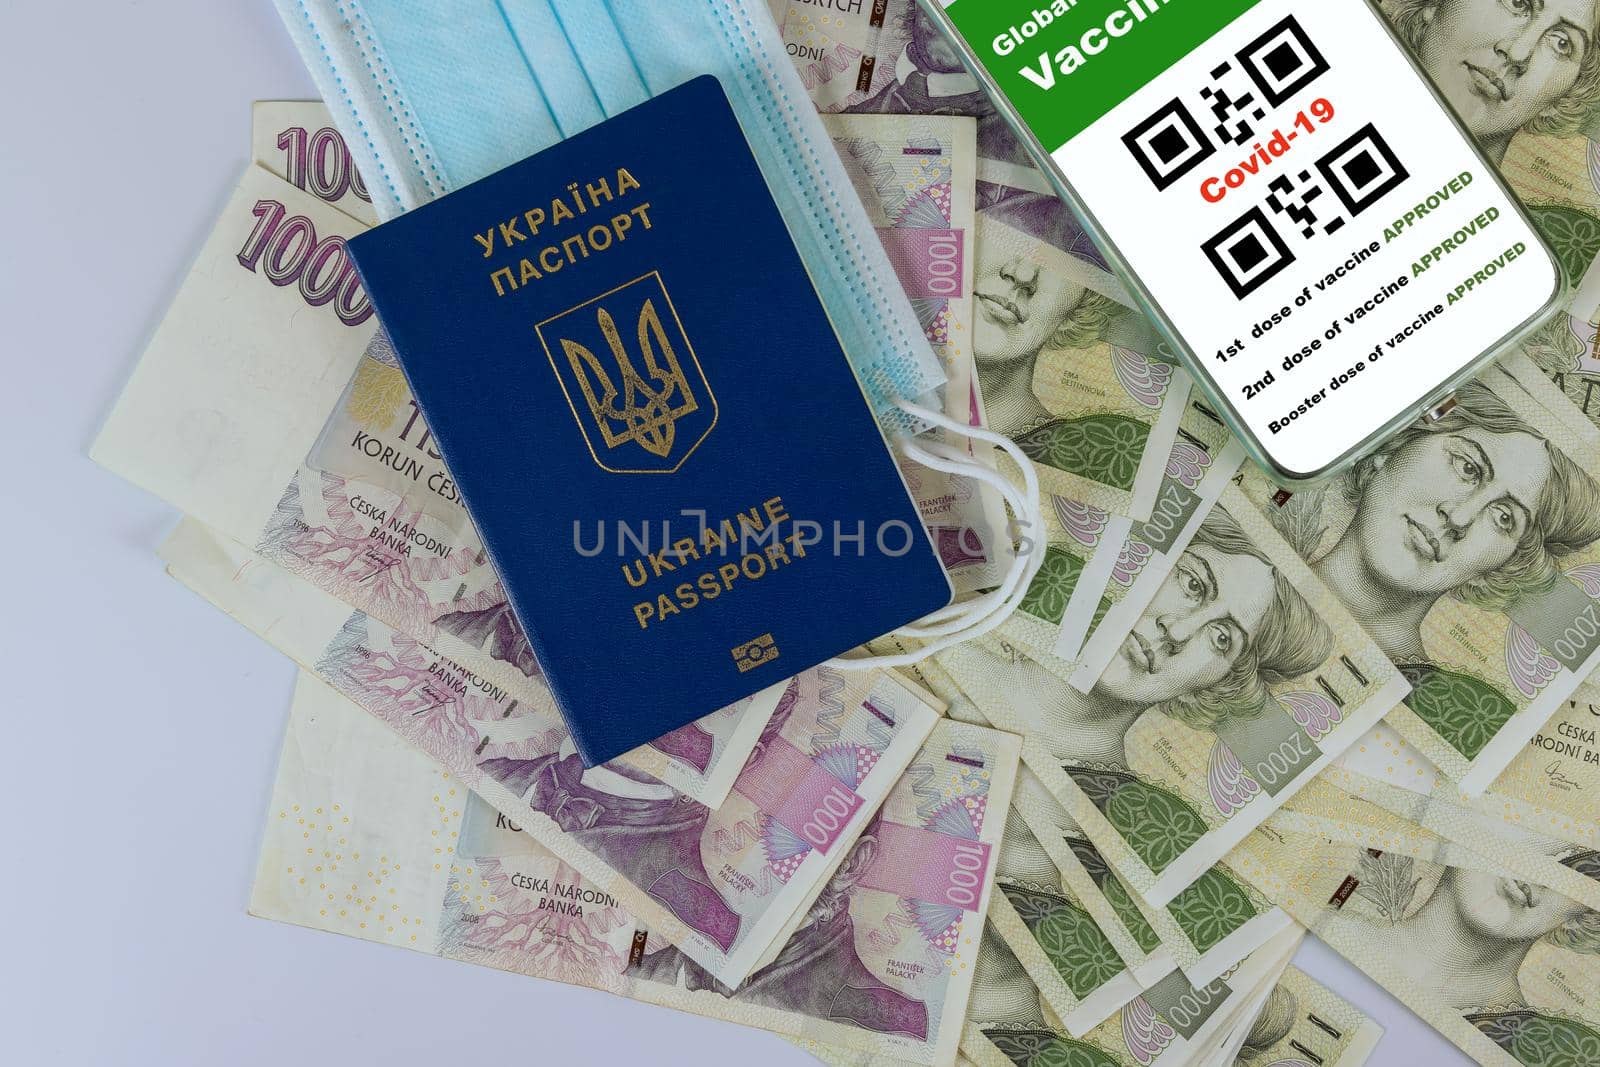 New normal travel Ukrainian passport of tourist to Czech republic with smartphone display on vaccinated COVID-19 coronavirus certificate, immunity vaccine passport of Czech Koruna by ungvar